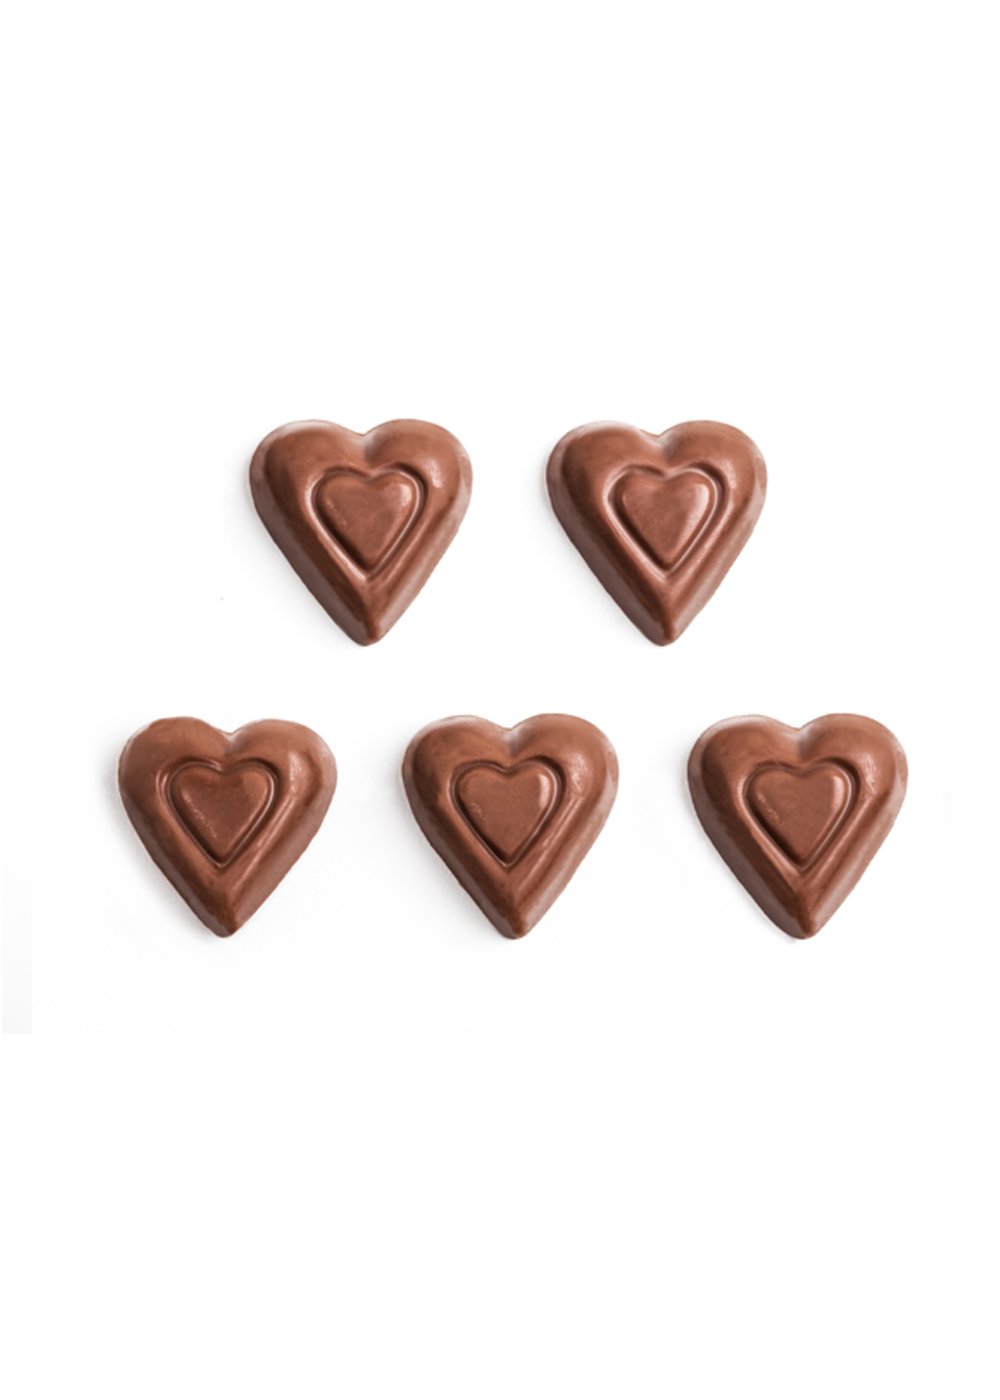 Wholesale Madelaine Chocolate Miniature Rainbow Hearts - 30 Lb Bag Bulk